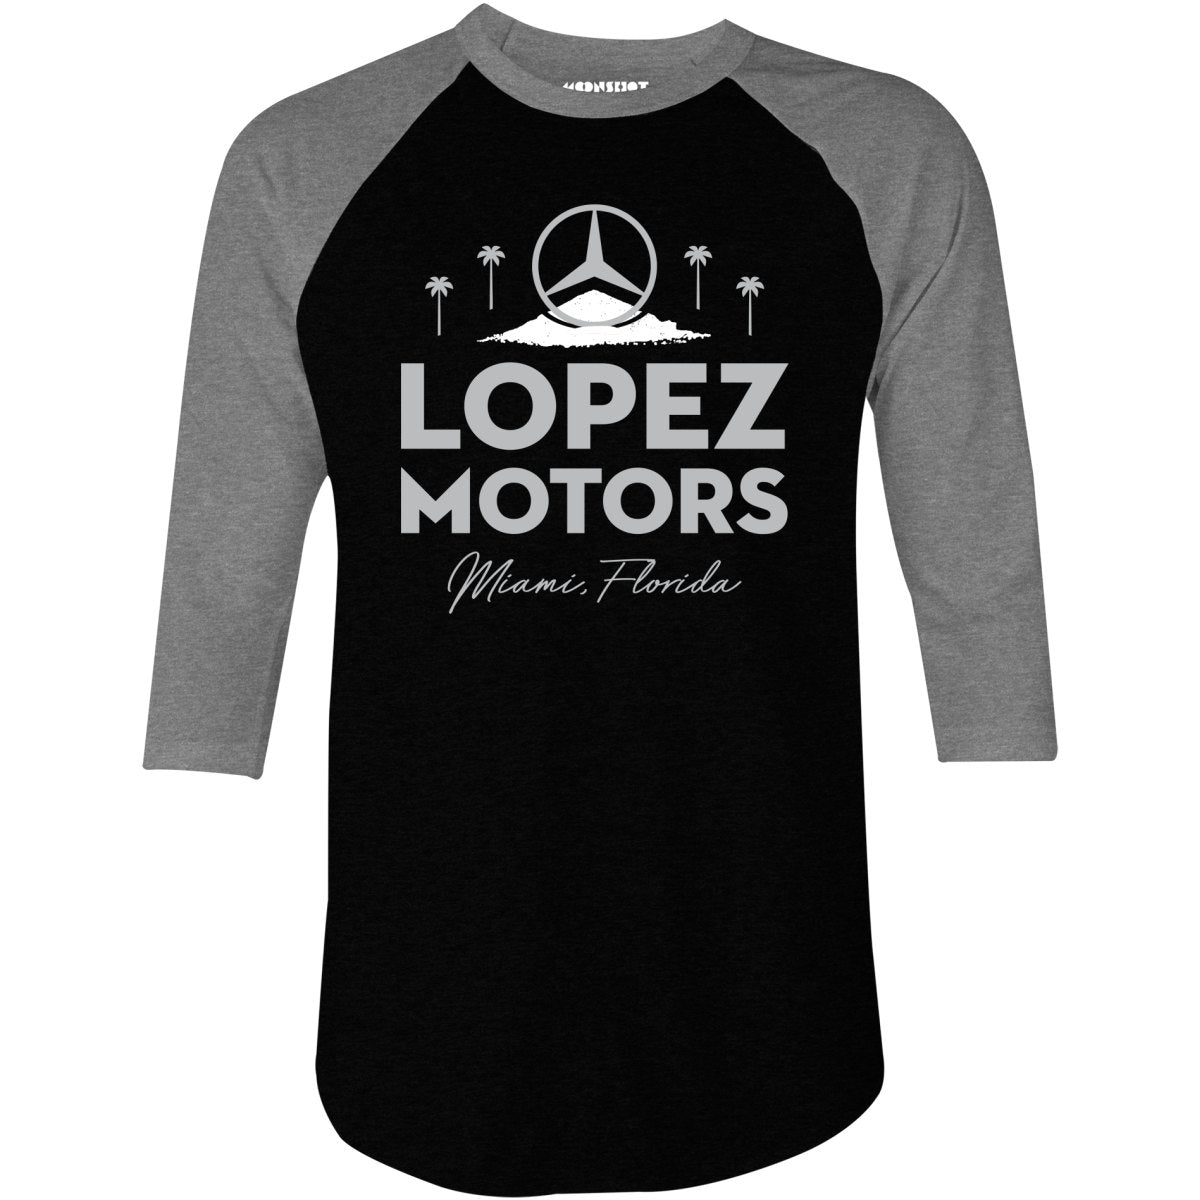 Lopez Motors - 3/4 Sleeve Raglan T-Shirt